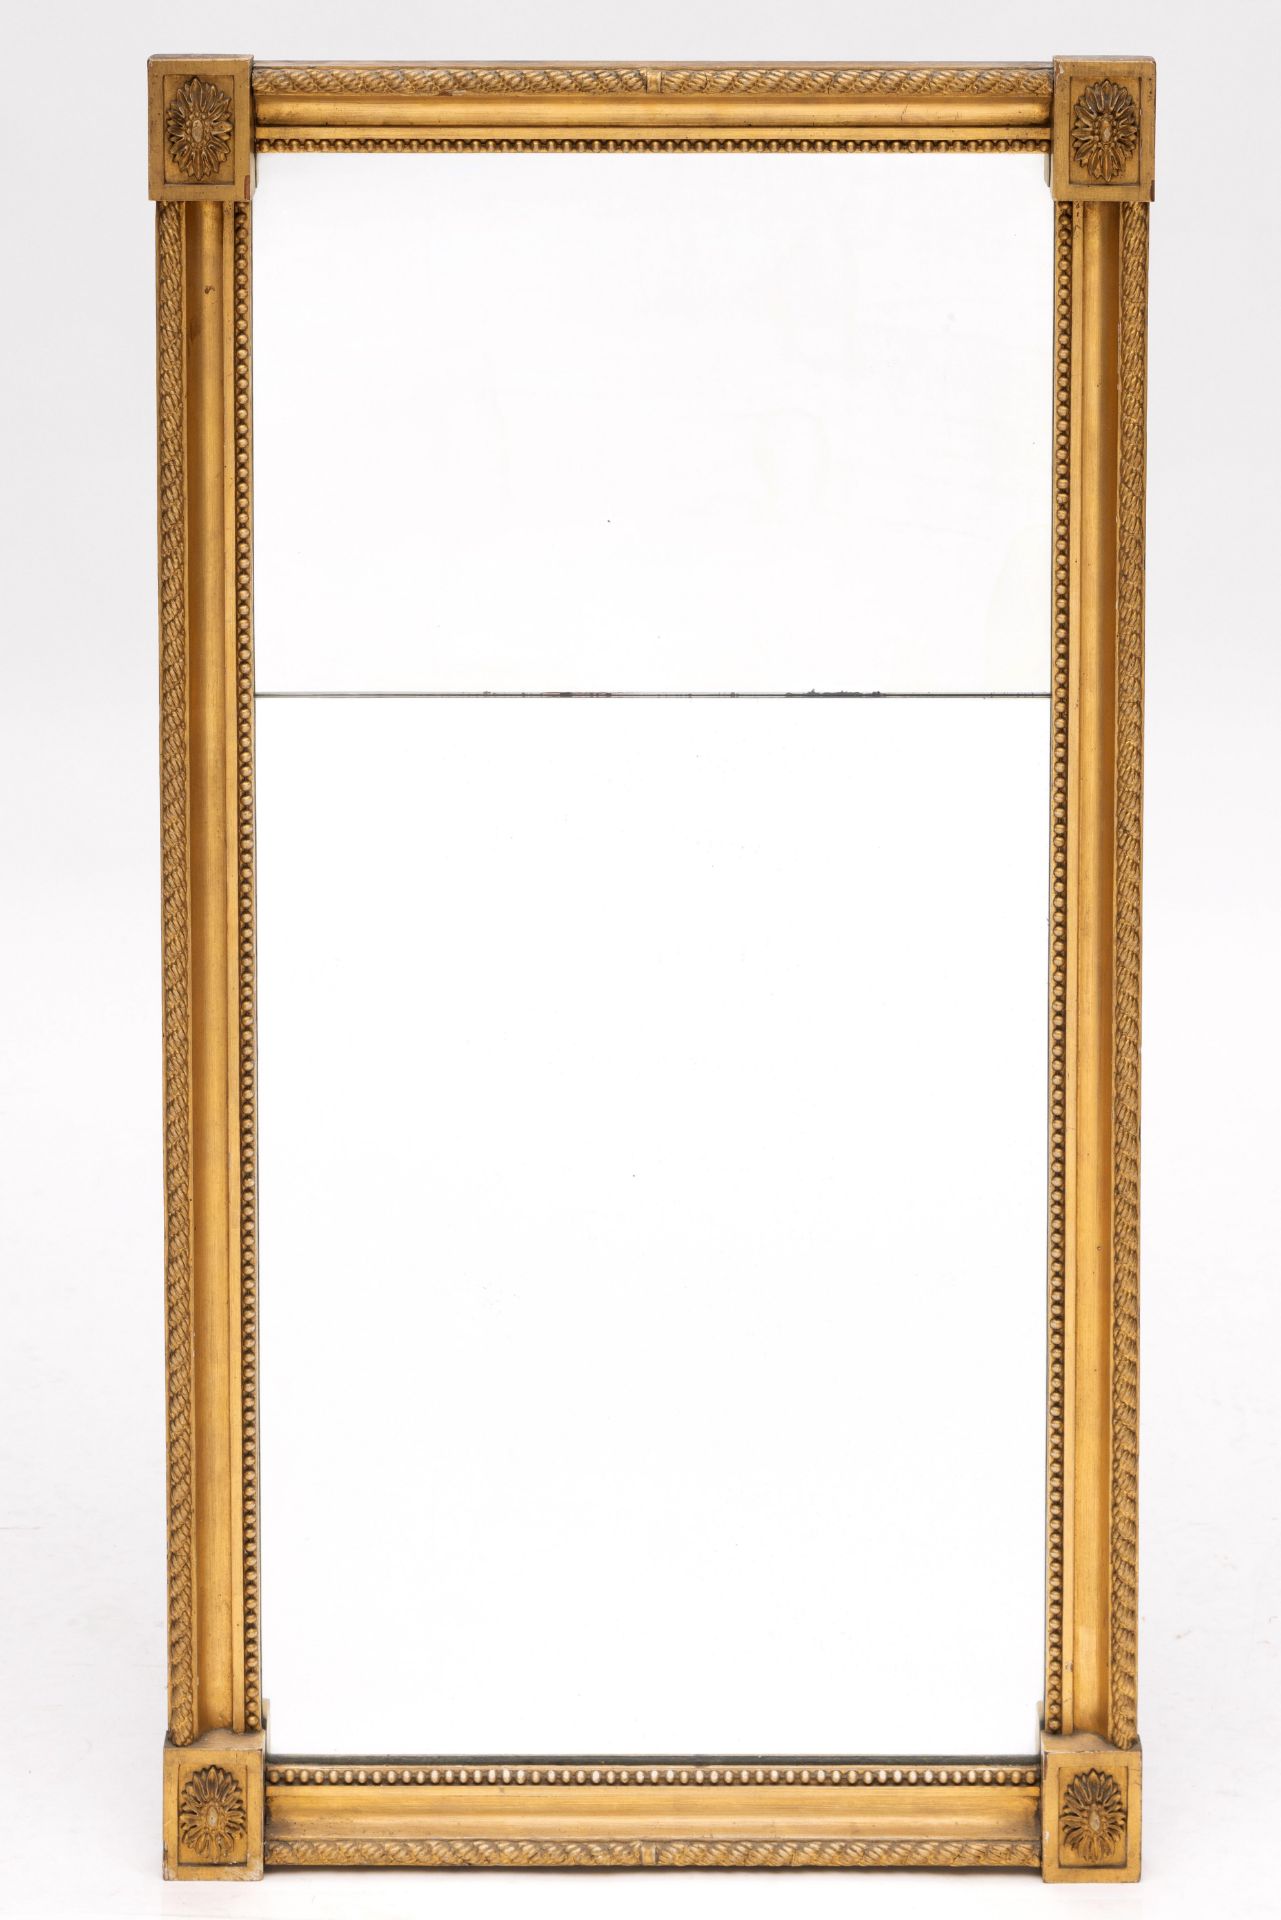 Rechthoekige spiegel in verguld houten grenenhouten lijst in Louis XVI-stijl, 19e eeuw,